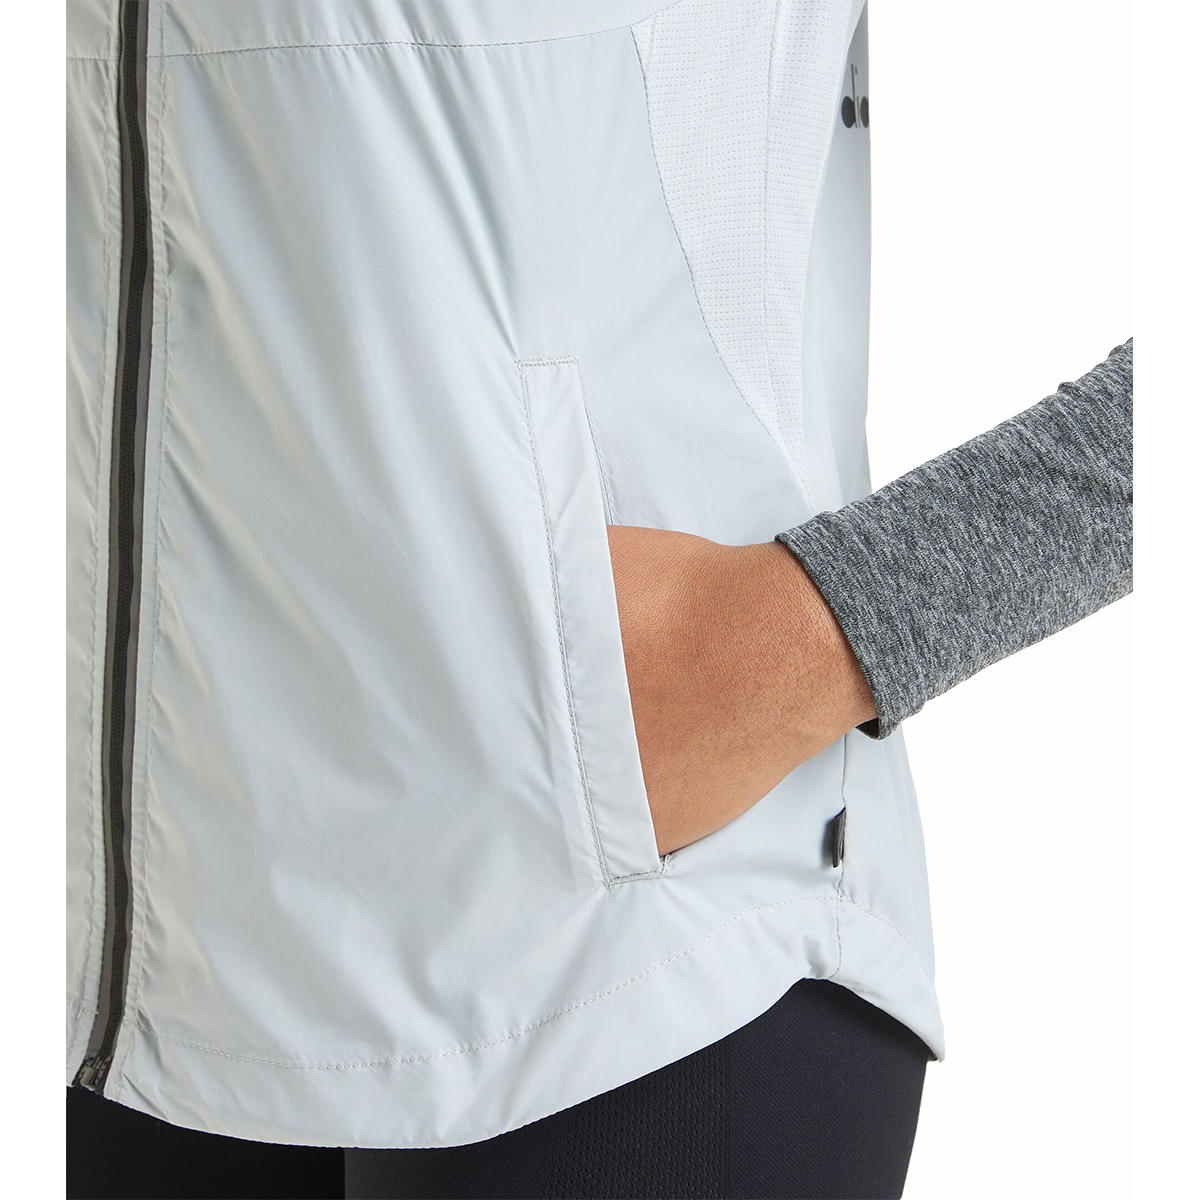 Diadora Packable Vest, , large image number null